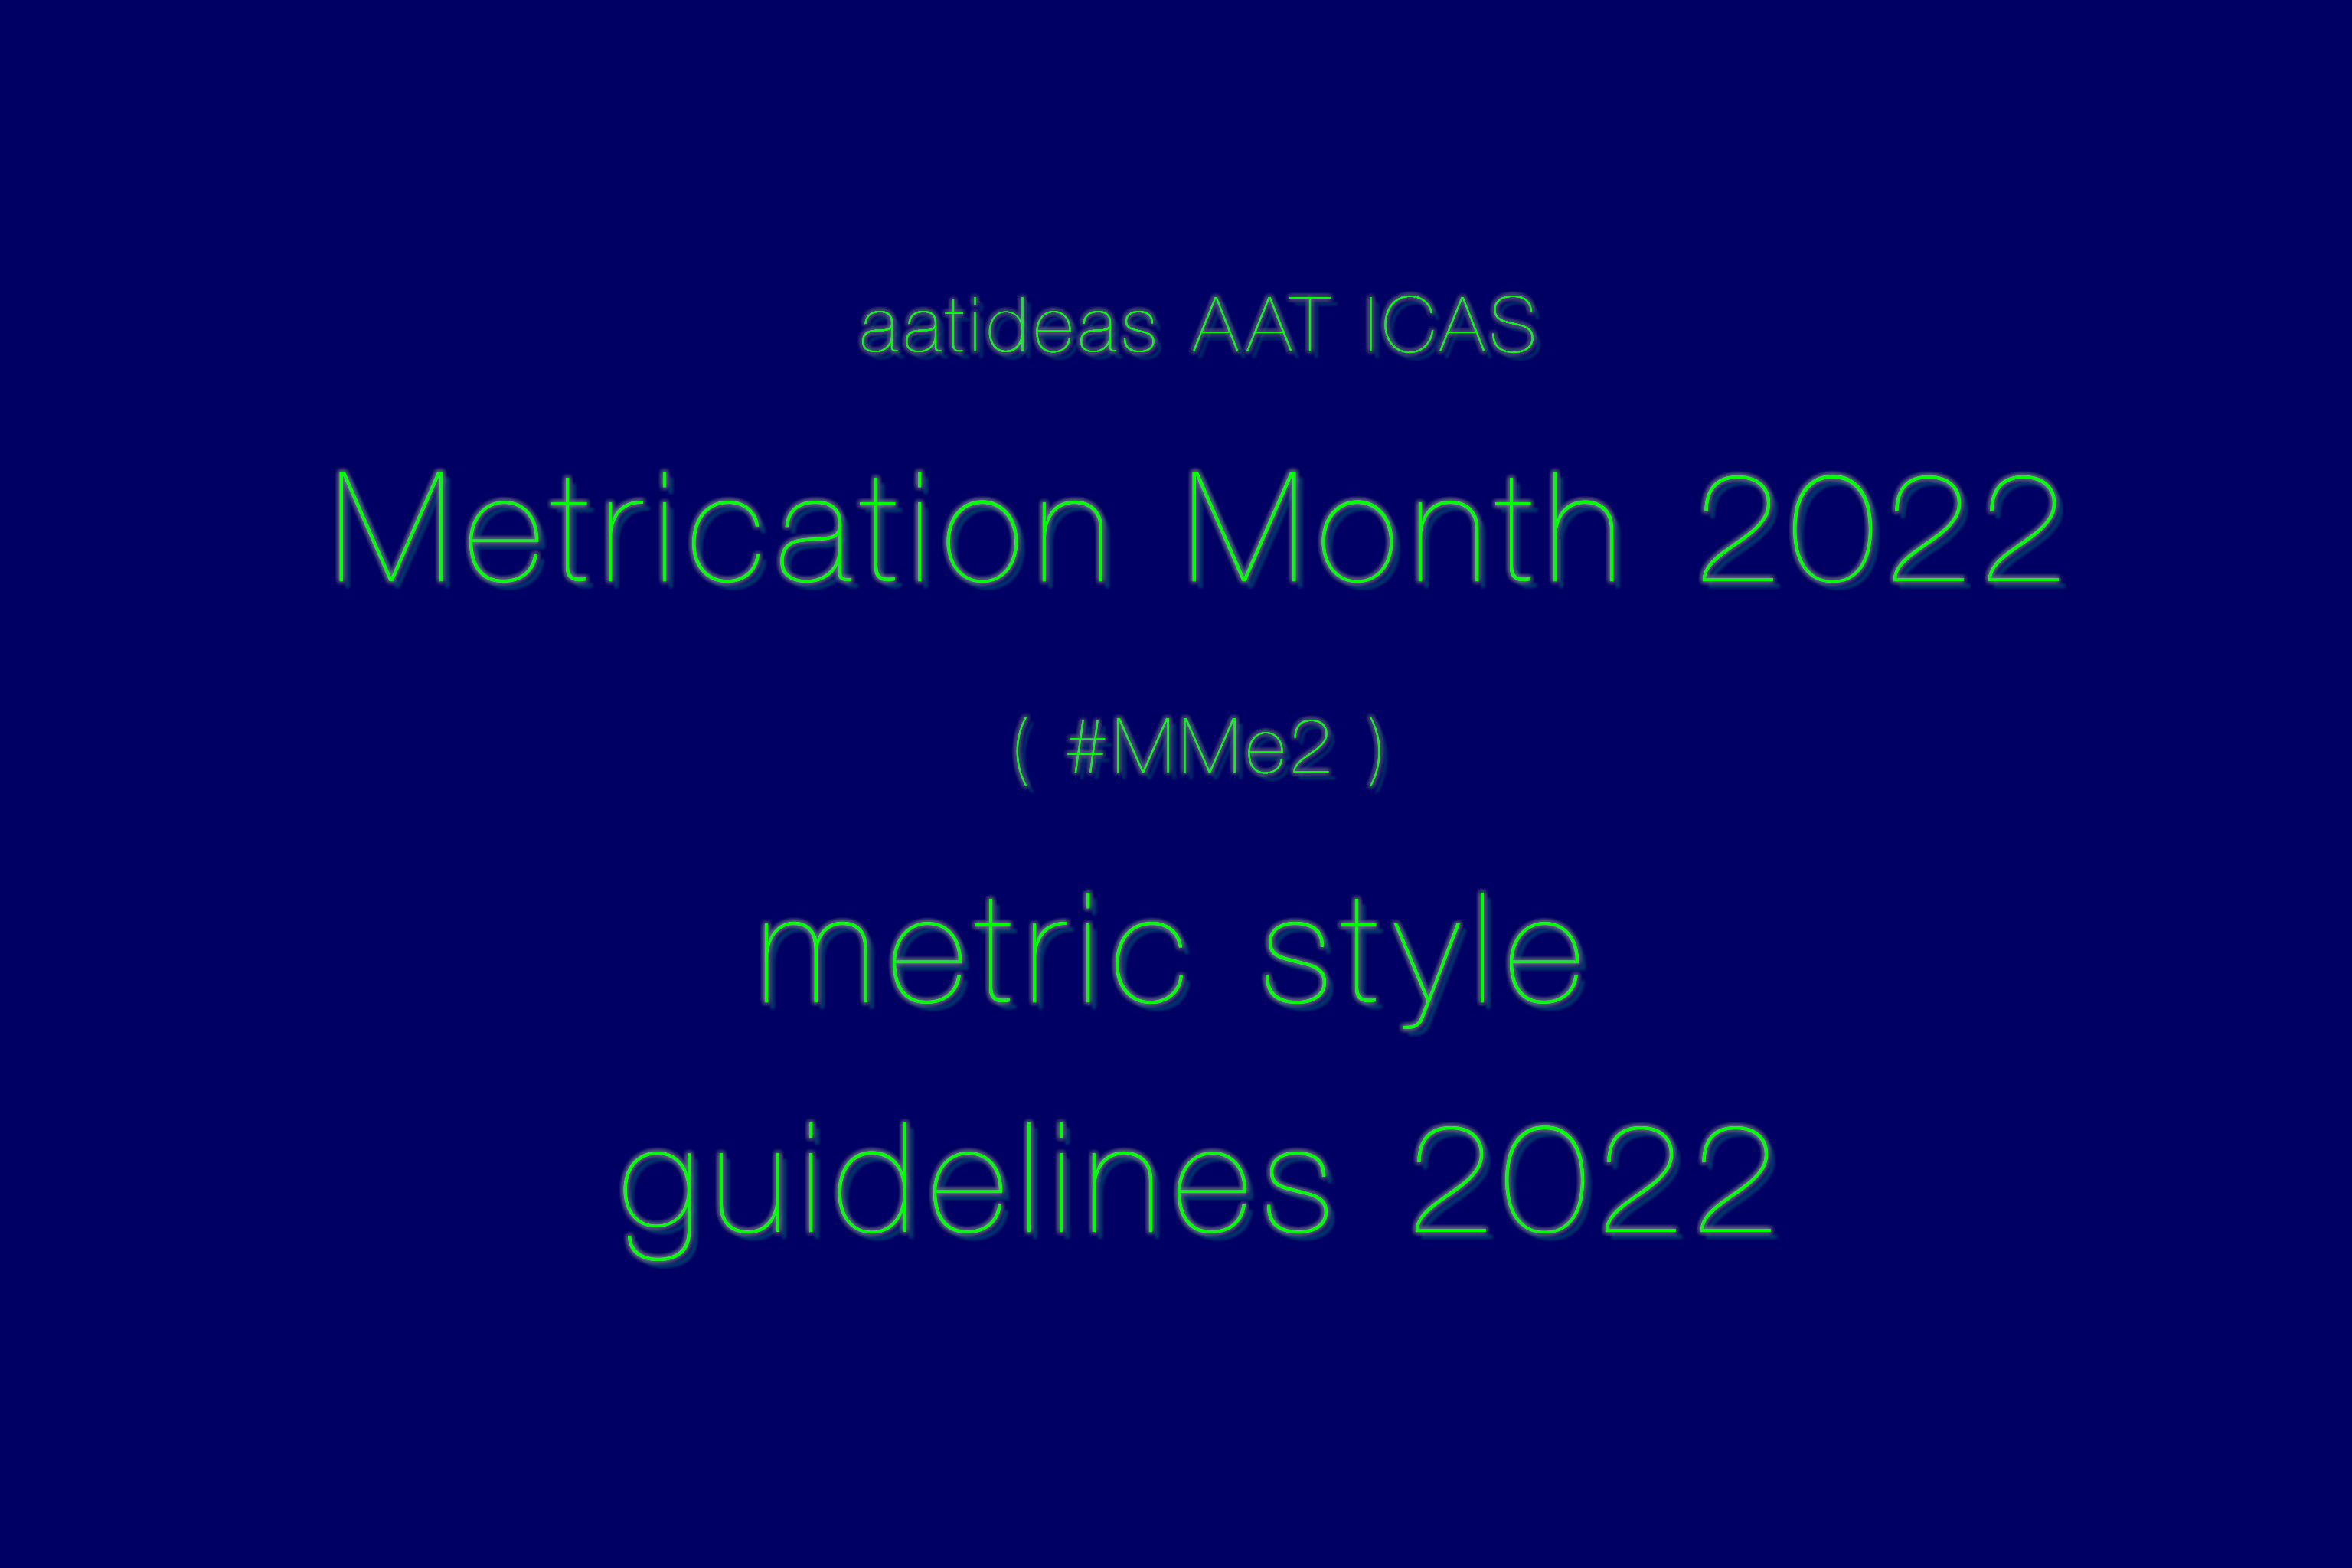 metrication month 2022